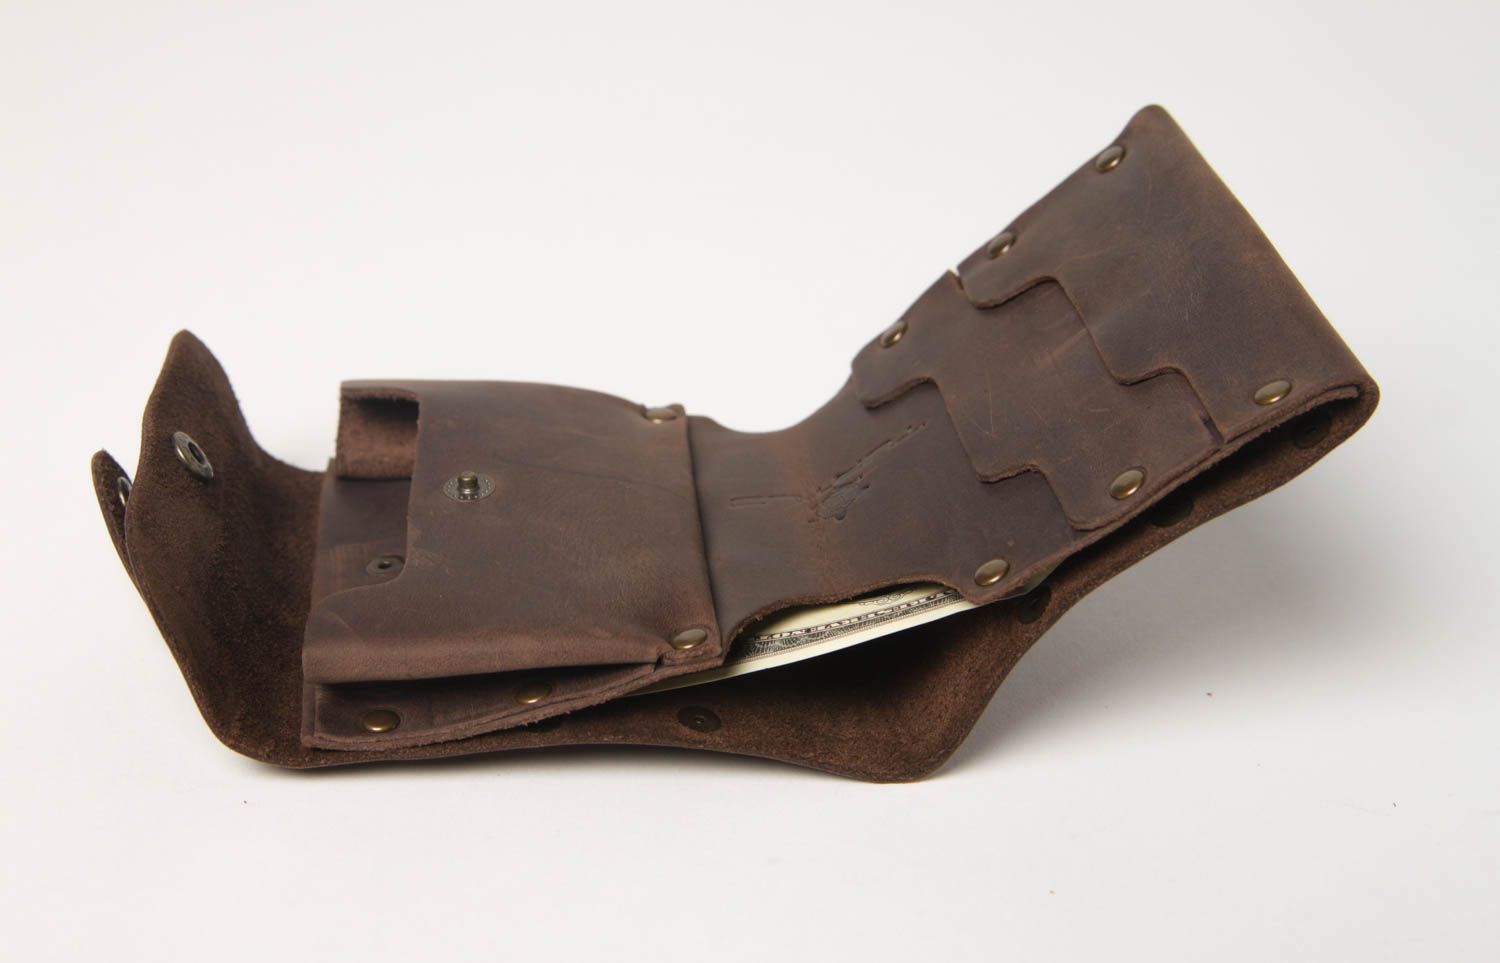 Stylish handmade leather purse designer accessories leather goods gift ideas photo 5